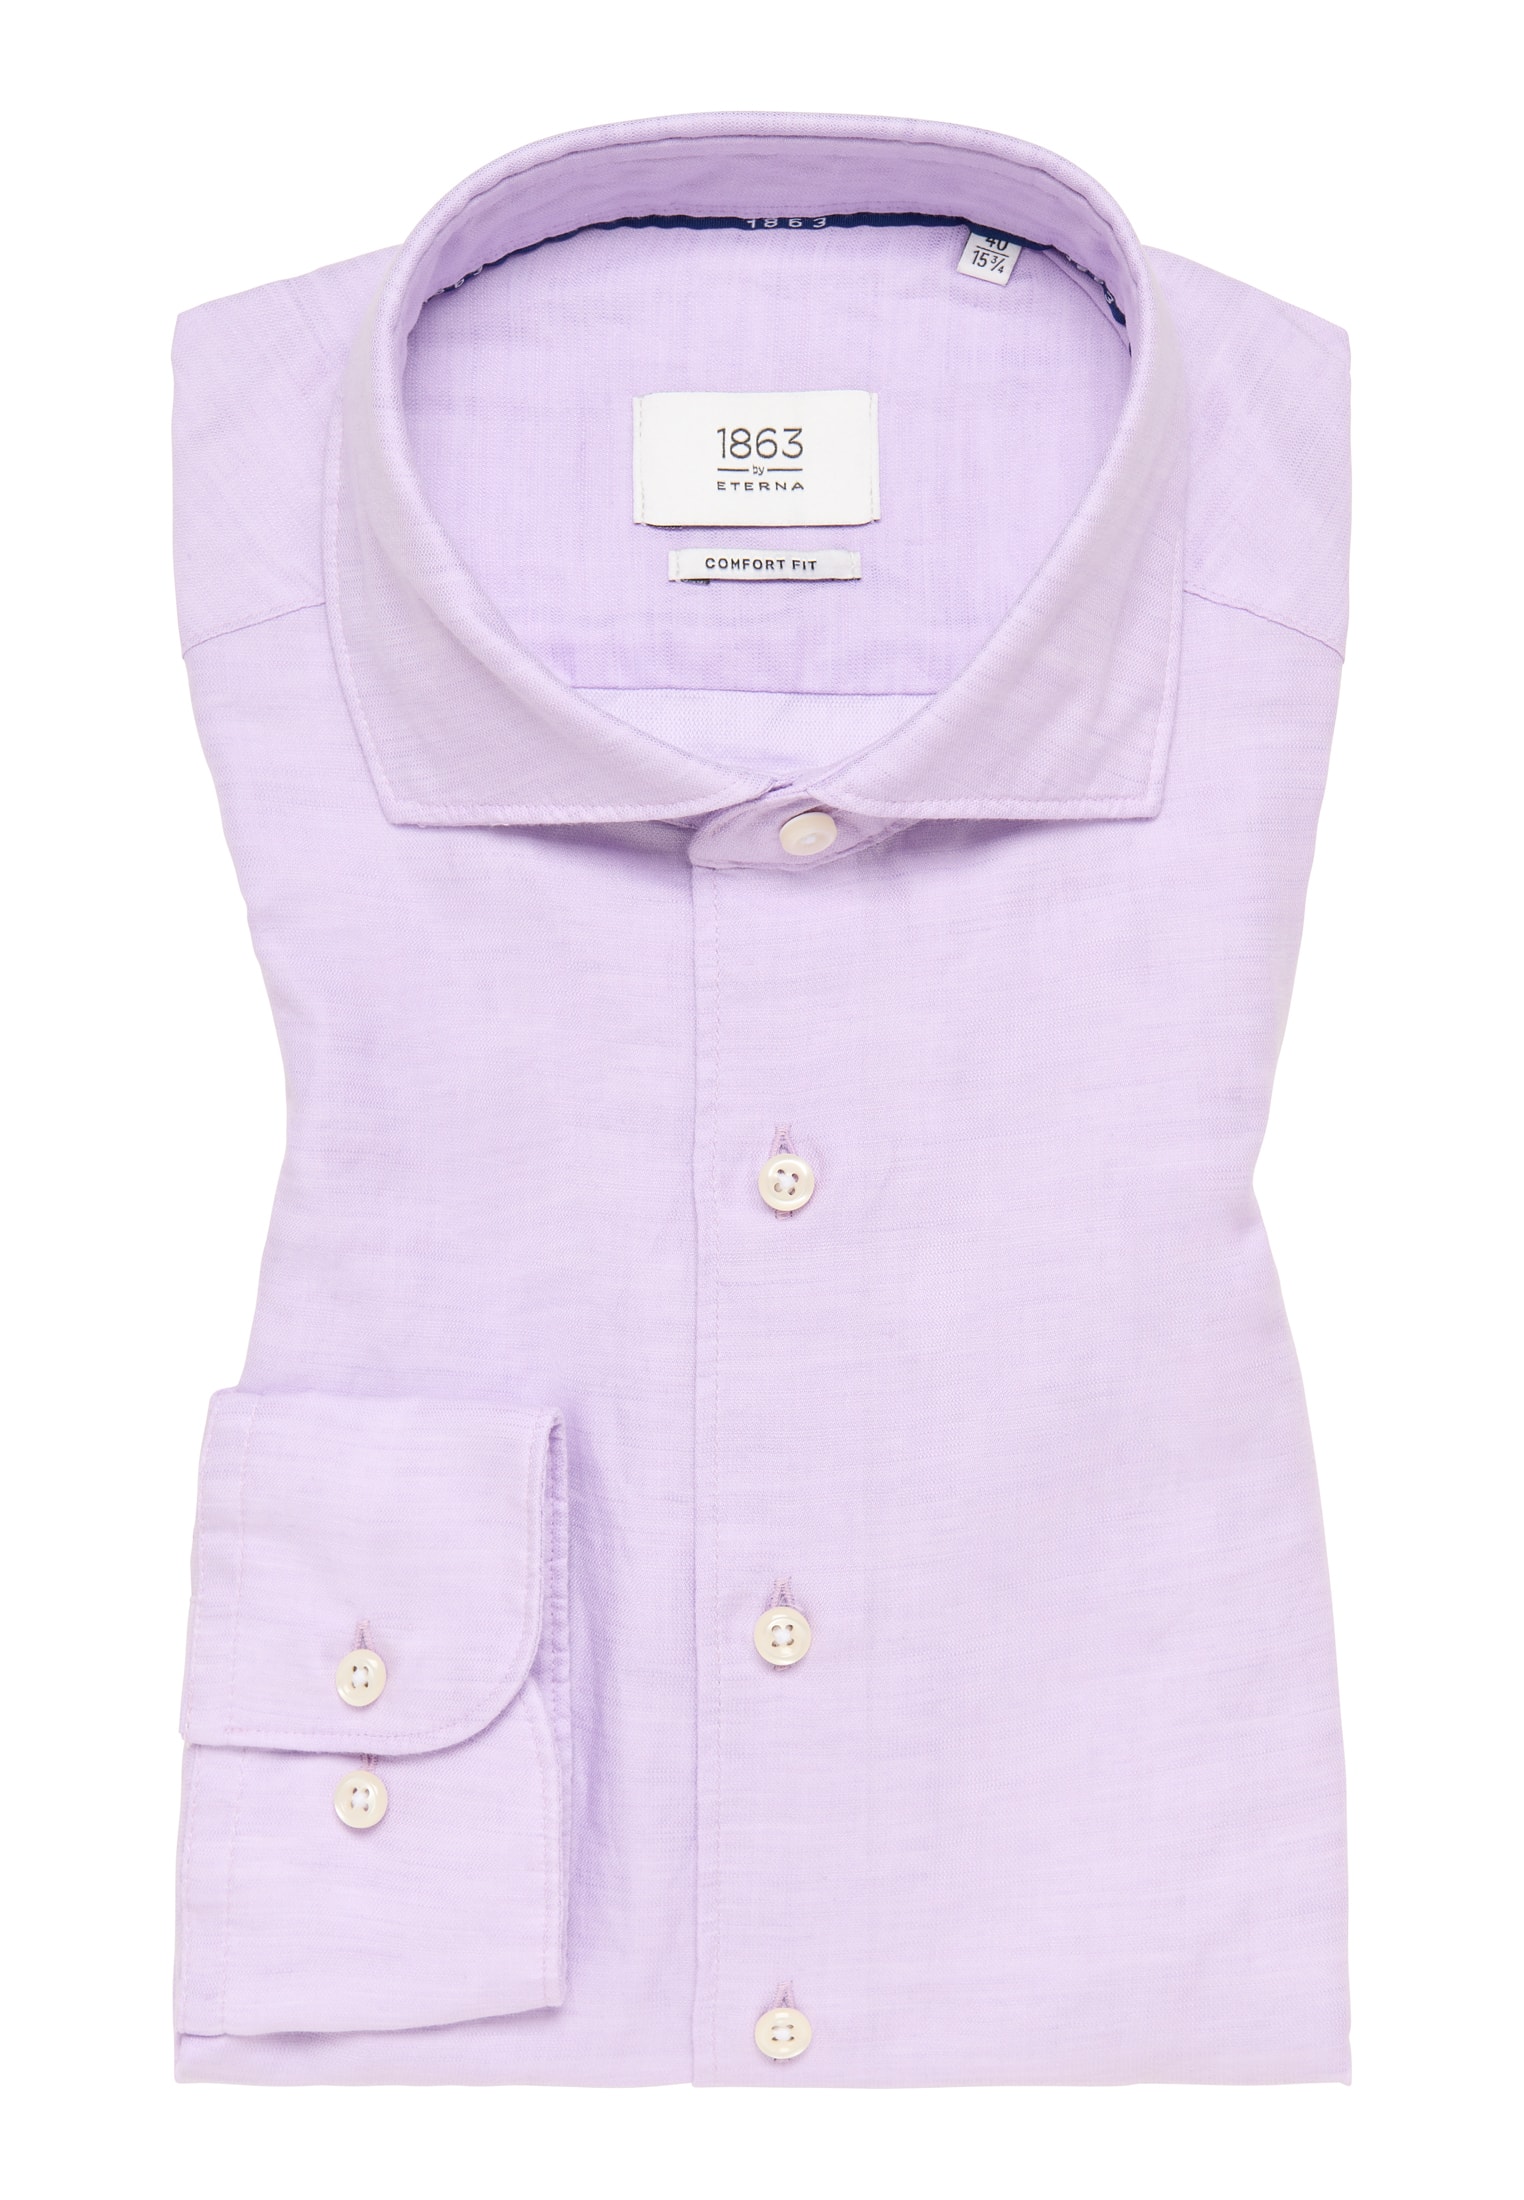 1SH00625-09-11-46-1/1 COMFORT | FIT | Langarm 46 | Linen Shirt | lavender lavender unifarben in